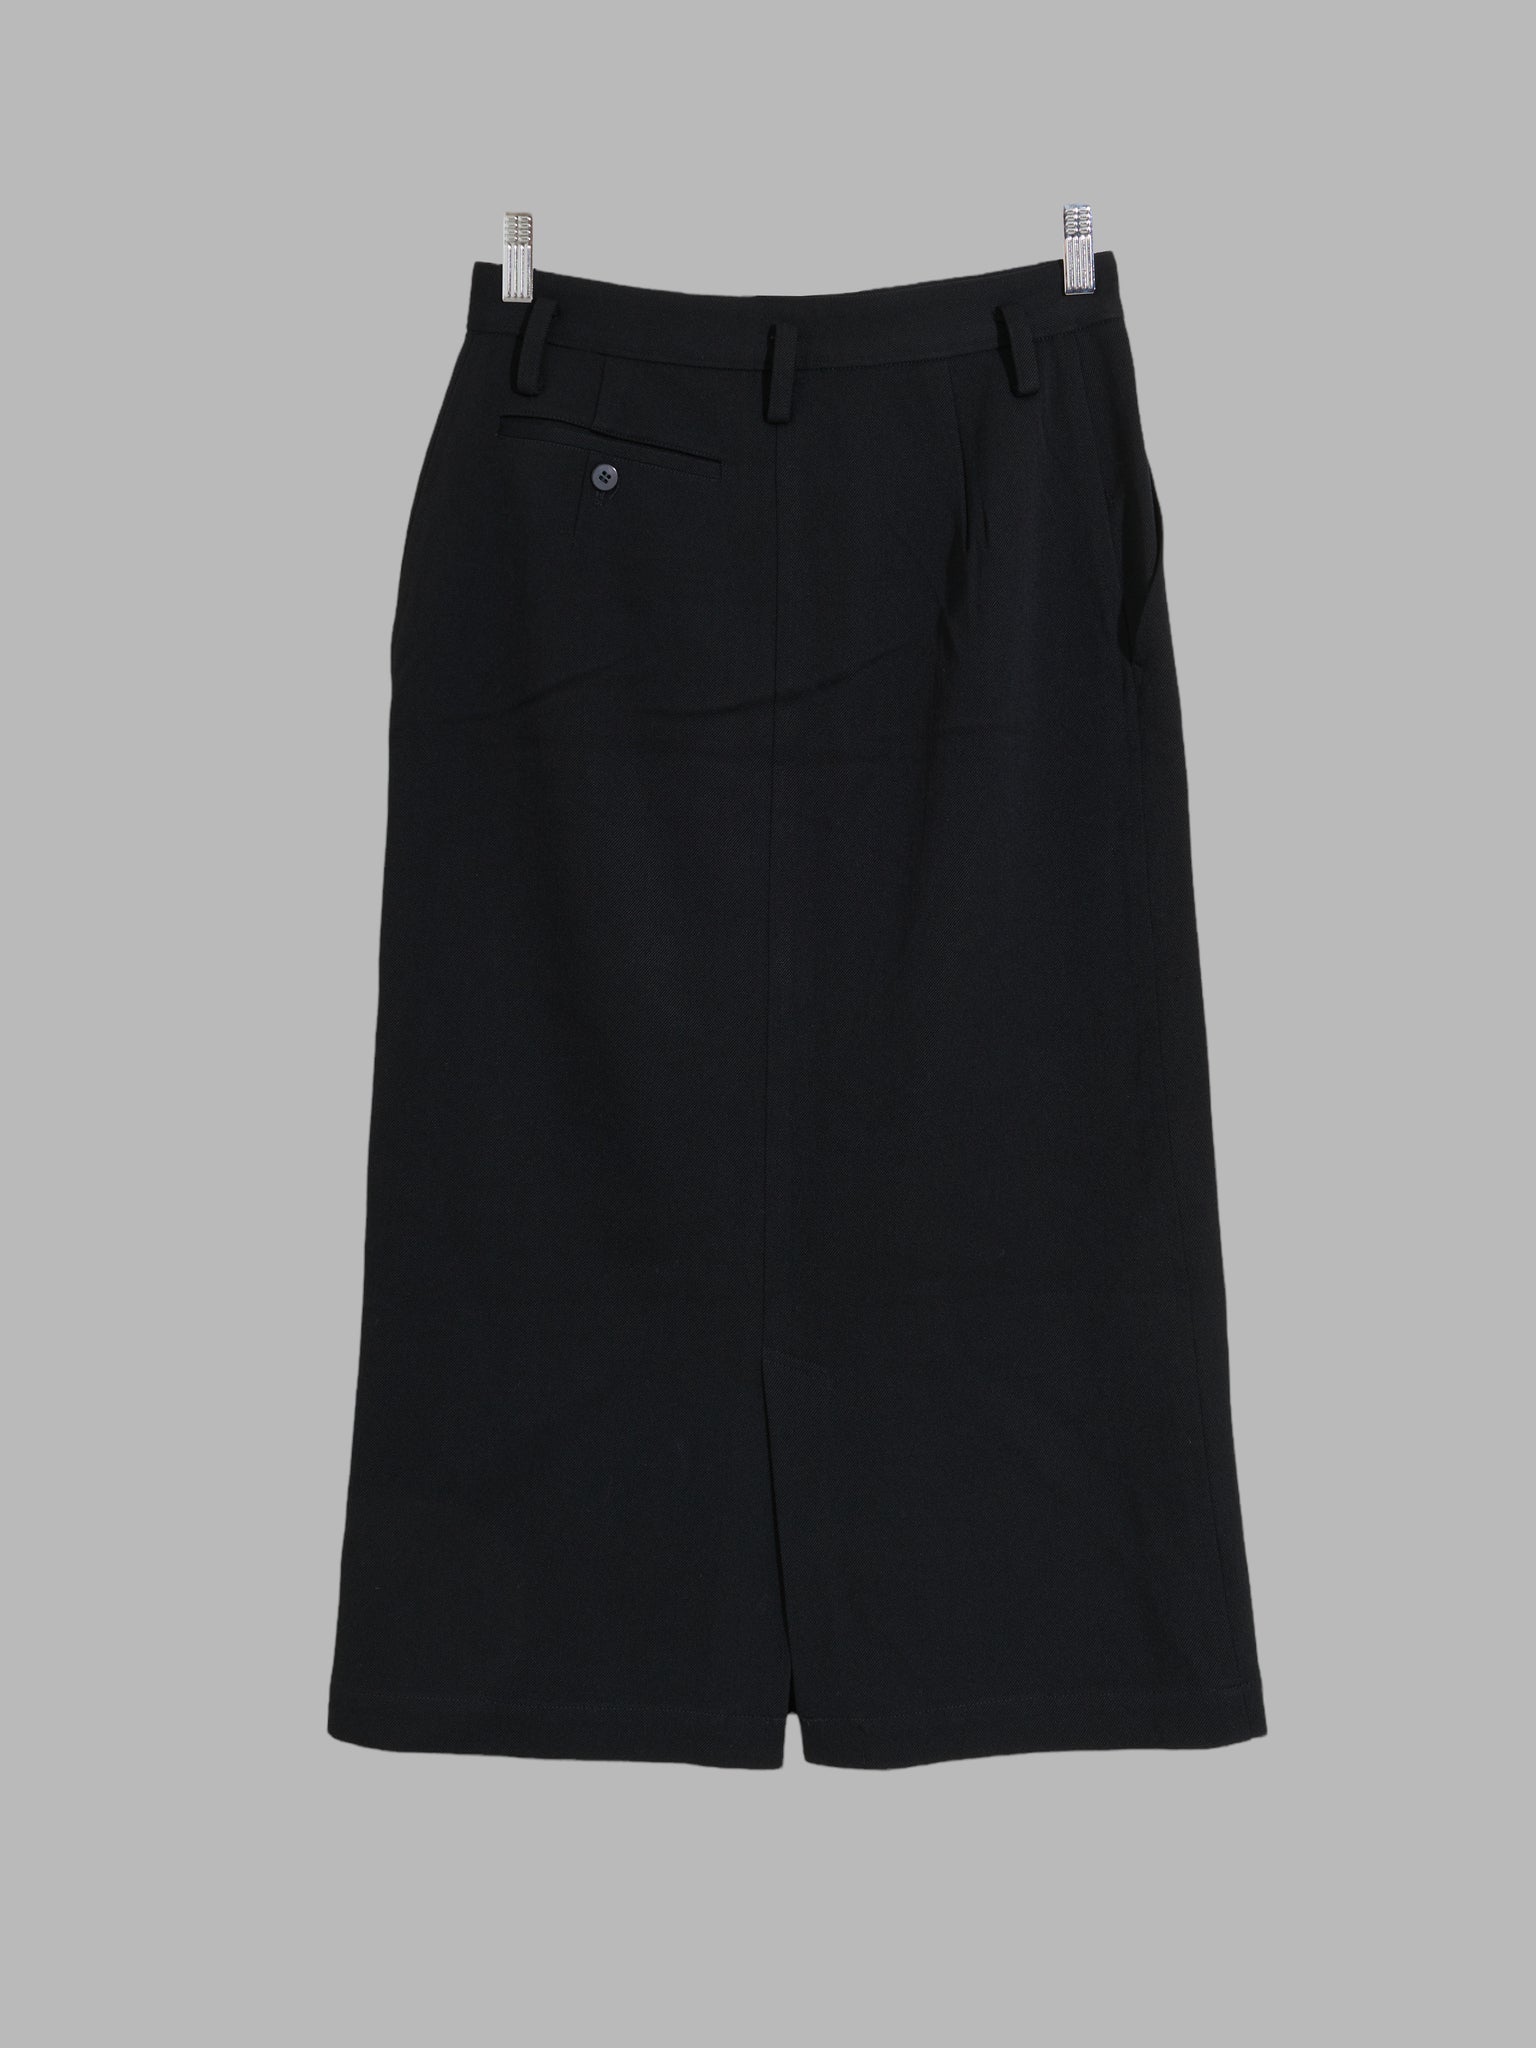 Tricot Comme des Garcons 1990 black wool gabardine long skirt - M